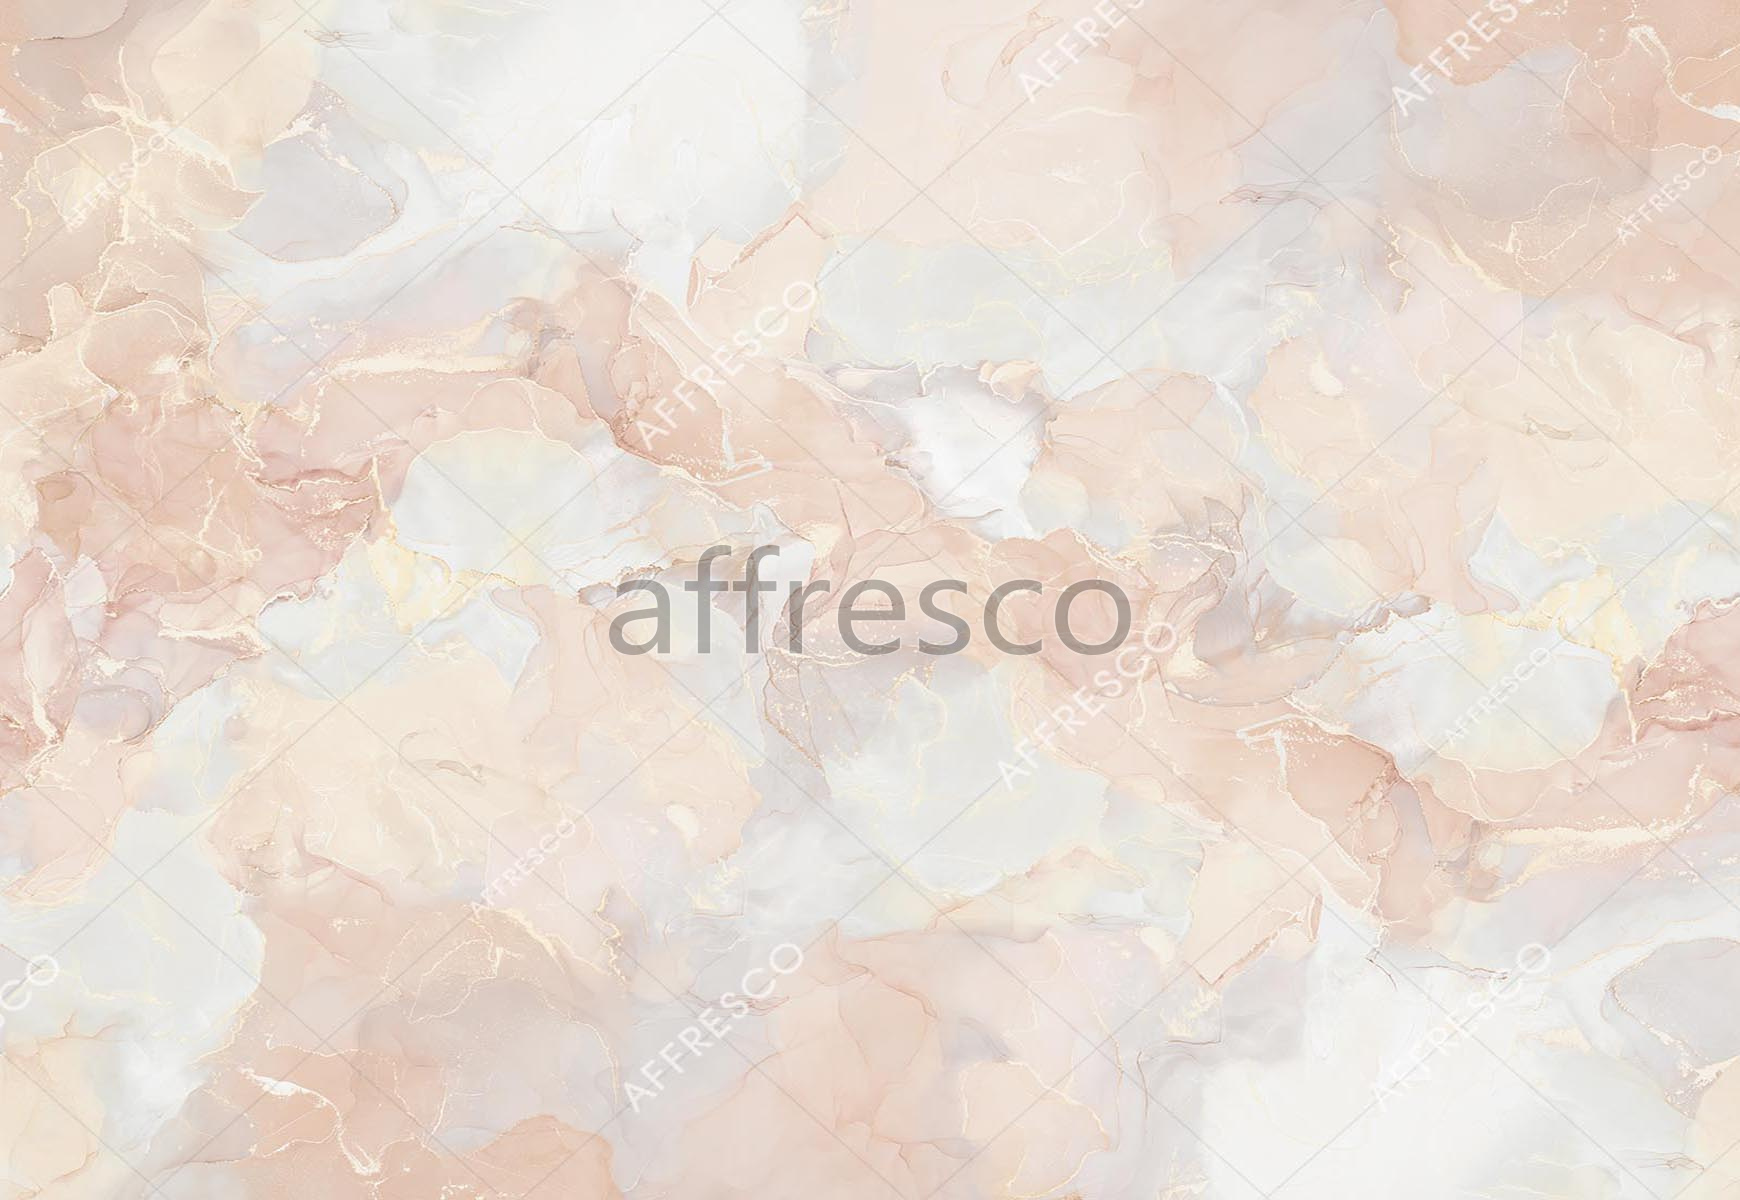 ID139100 | Fluid | Wonderful Florence | Affresco Factory